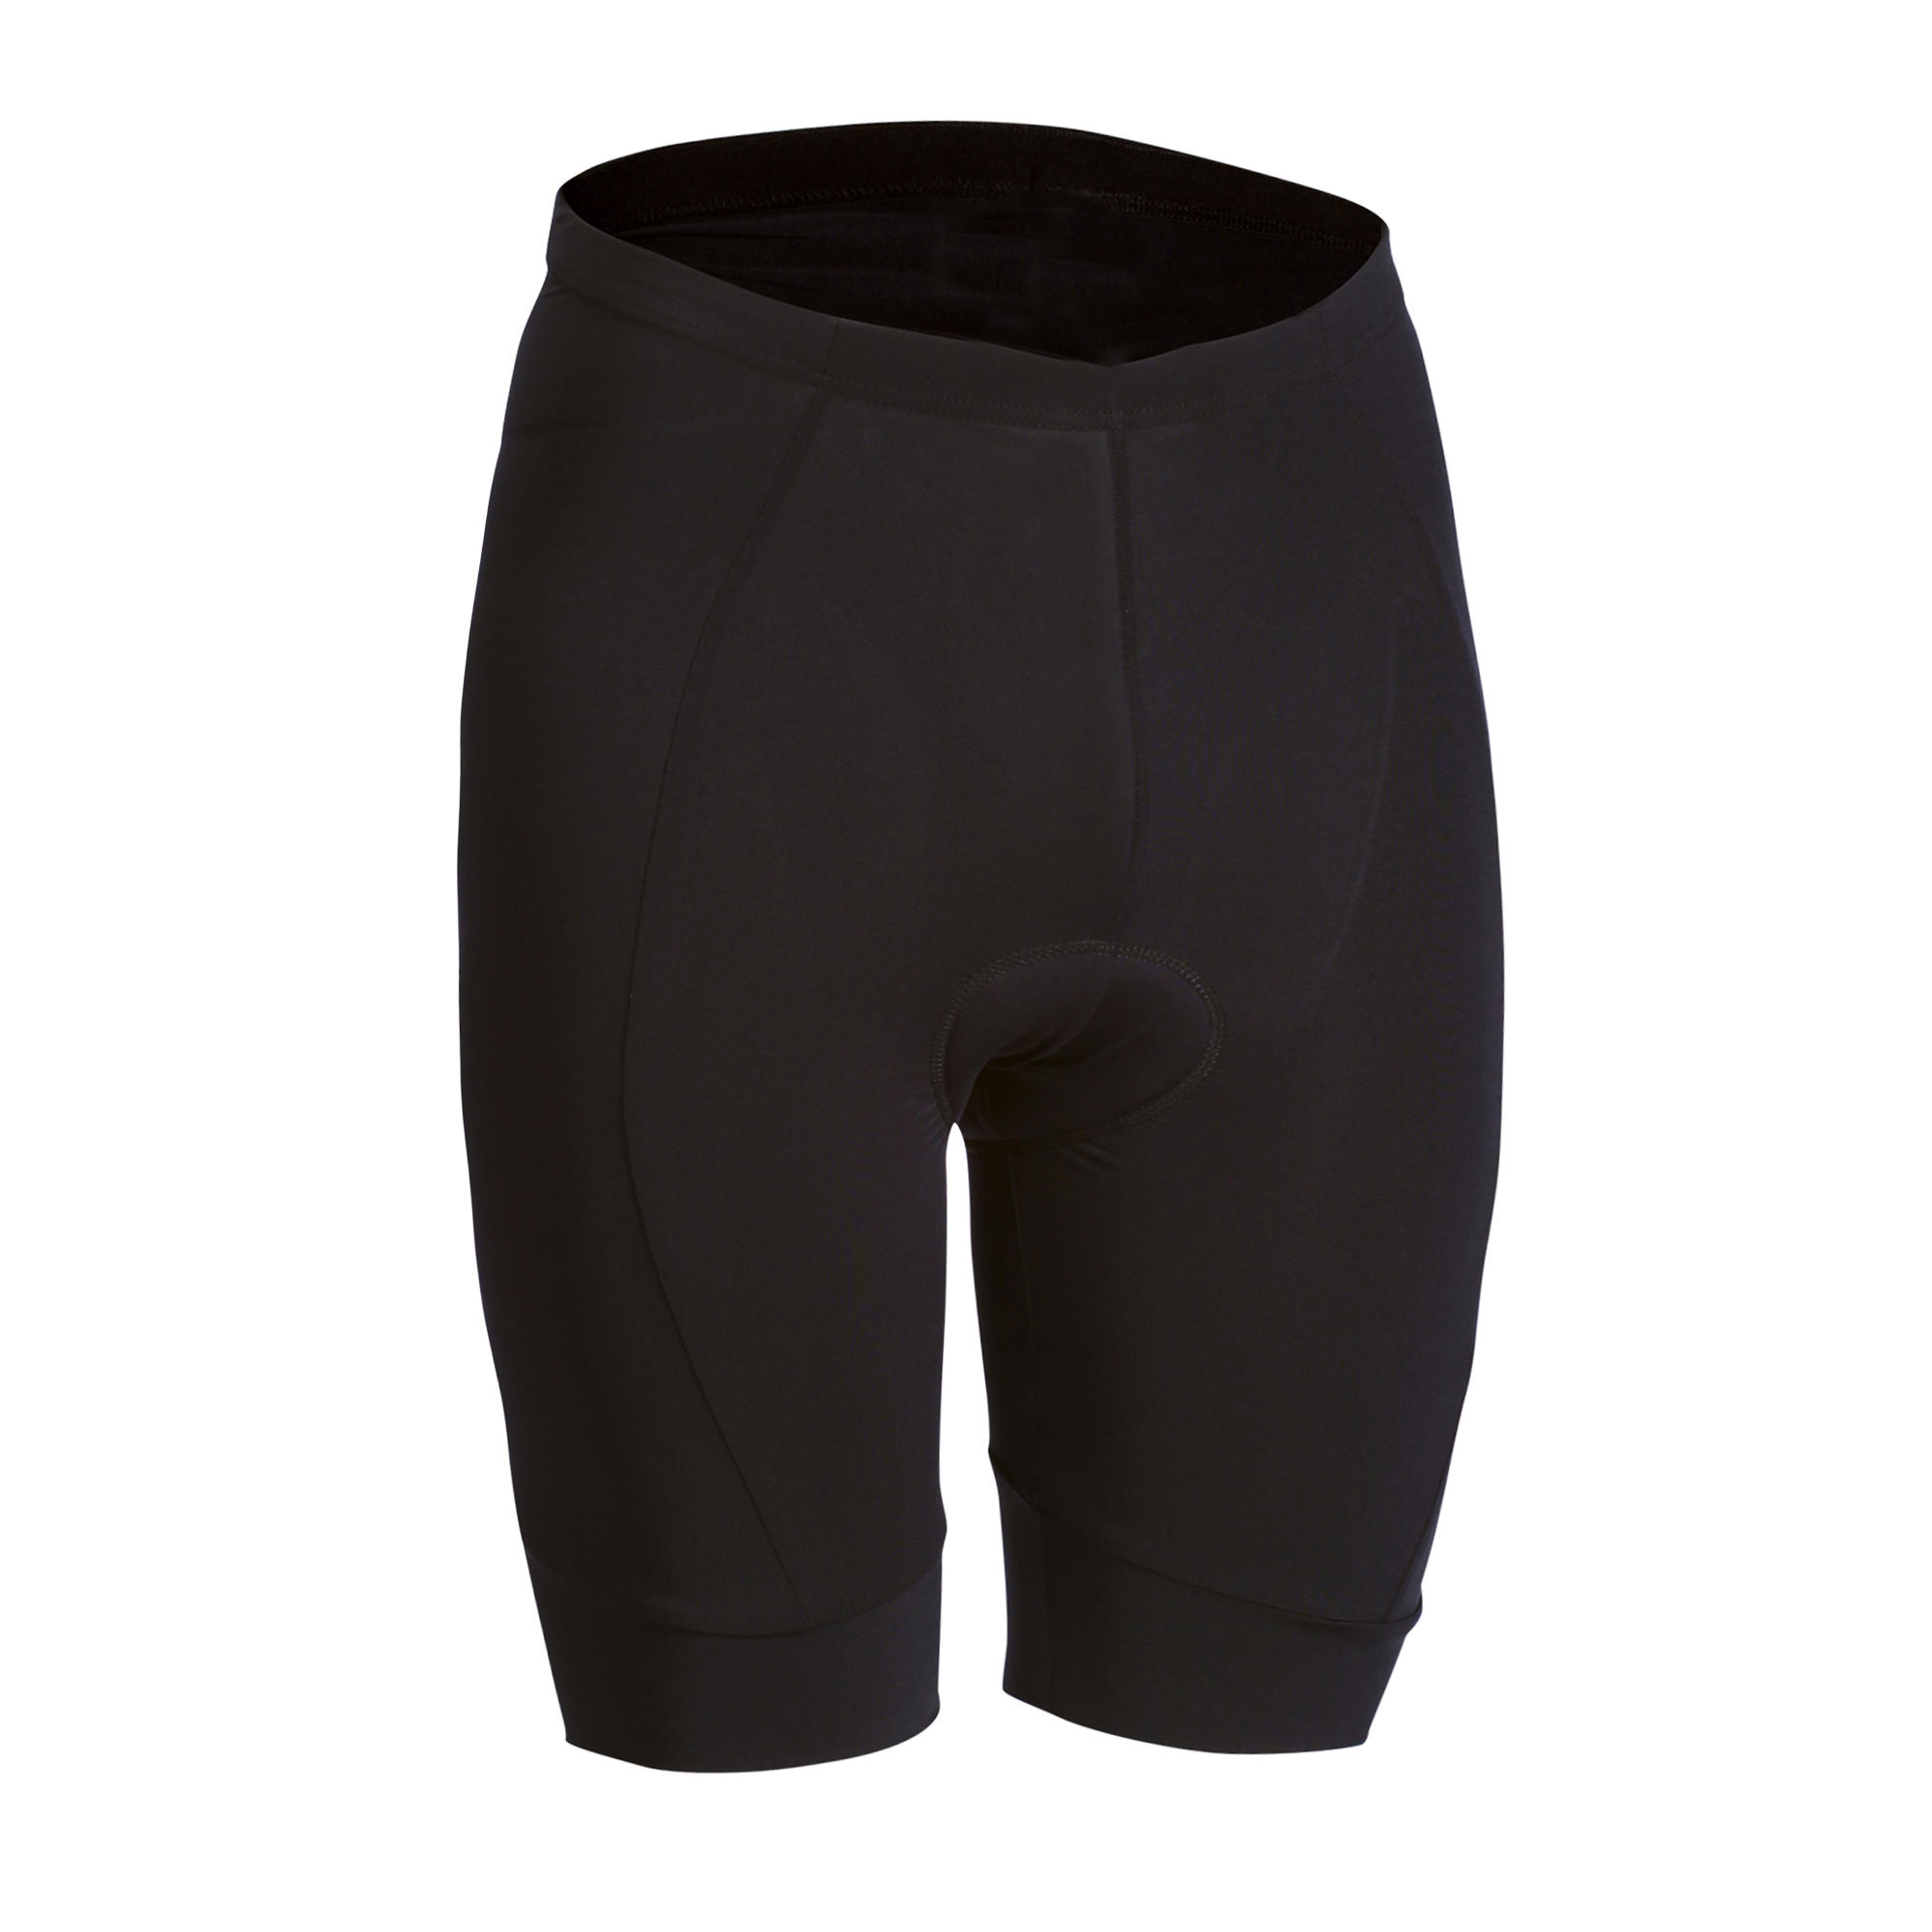 Buy Short 300 cycling shorts online 